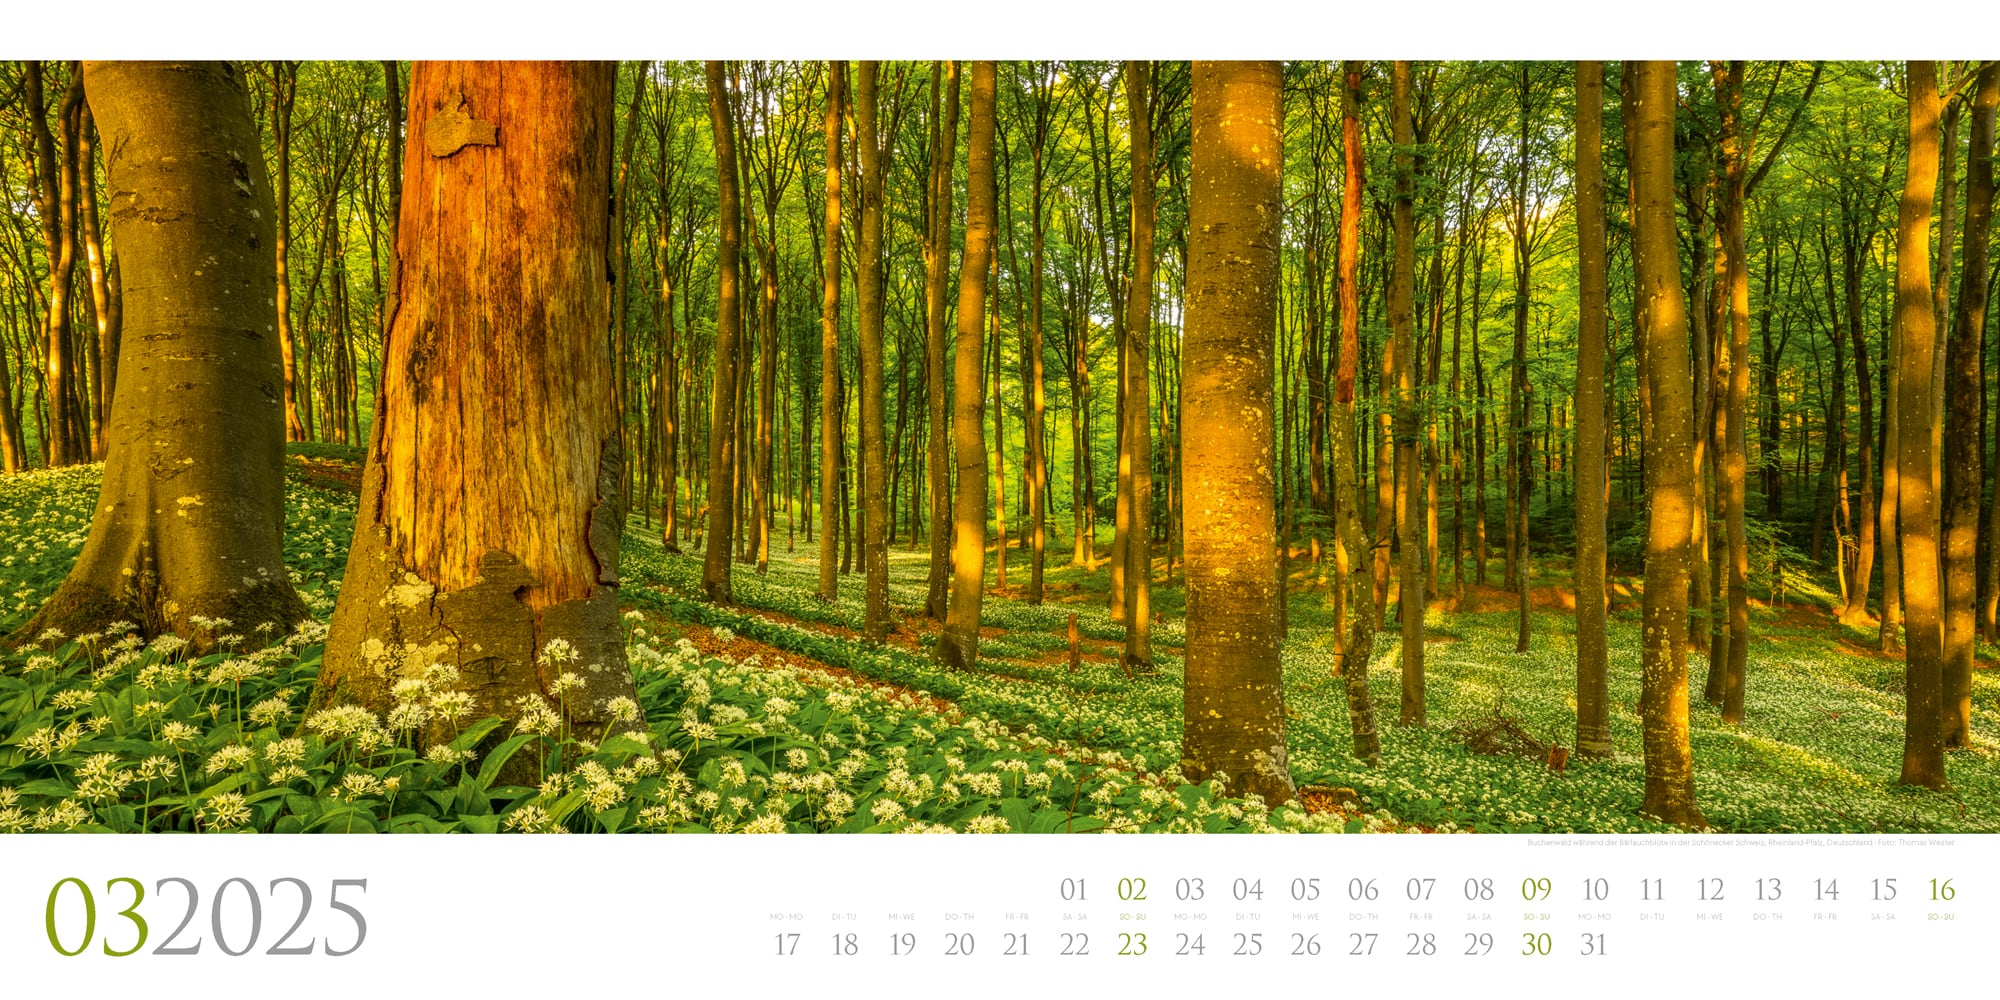 Ackermann Calendar Wild Forests 2025 - Inside View 03